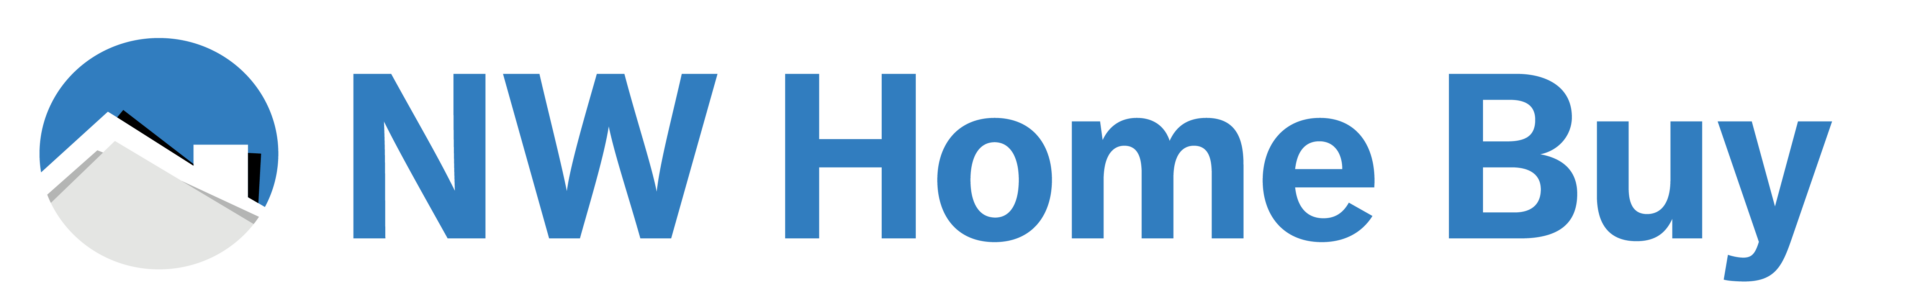 NW Home Buy logo